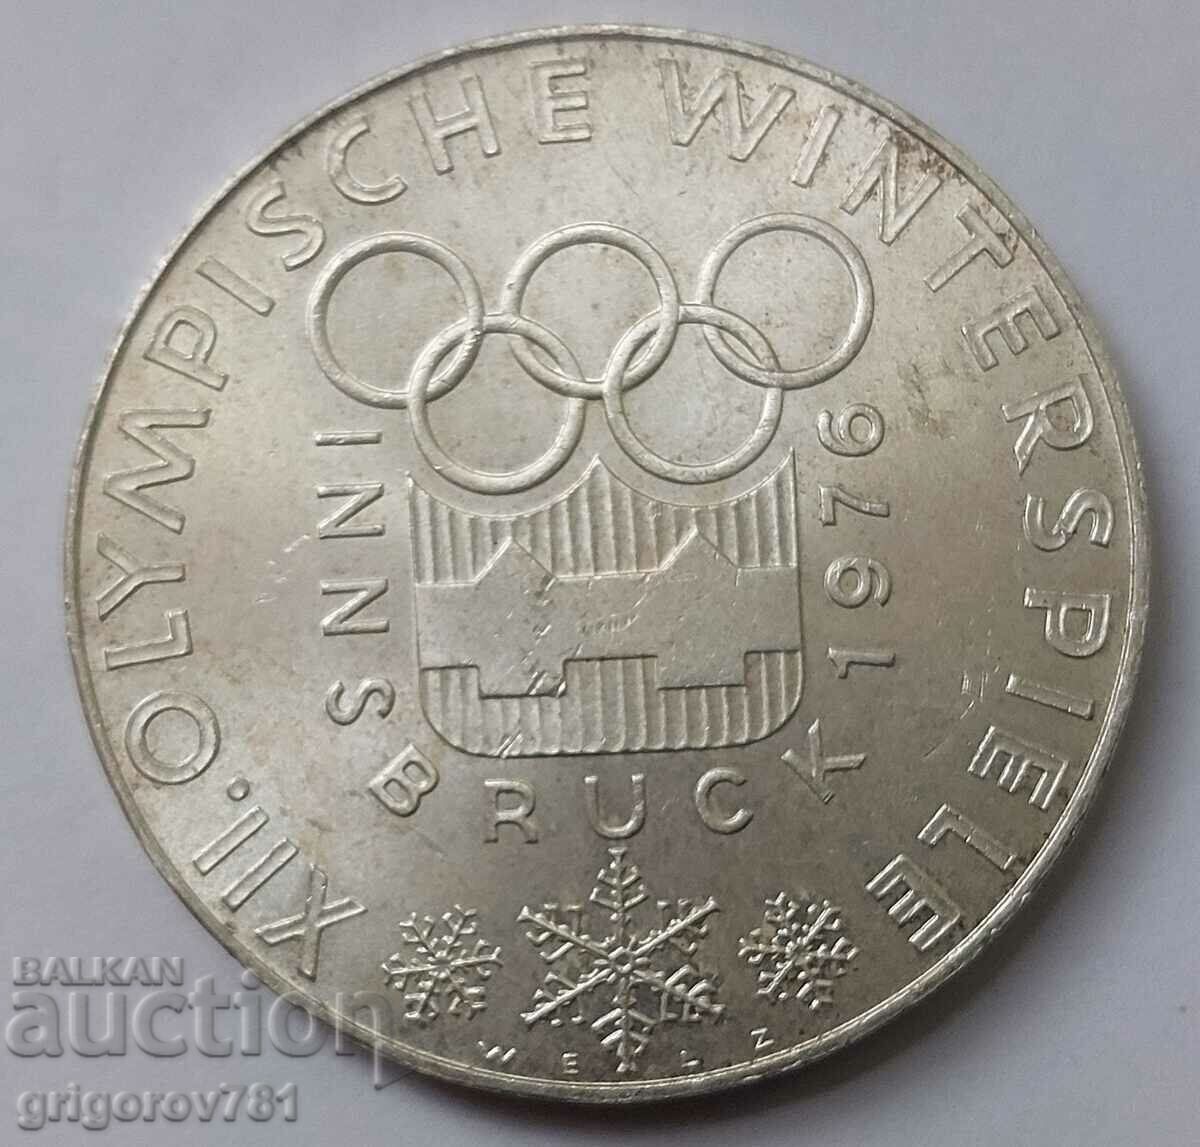 100 Shilling Silver Austria 1976 - Silver Coin #20